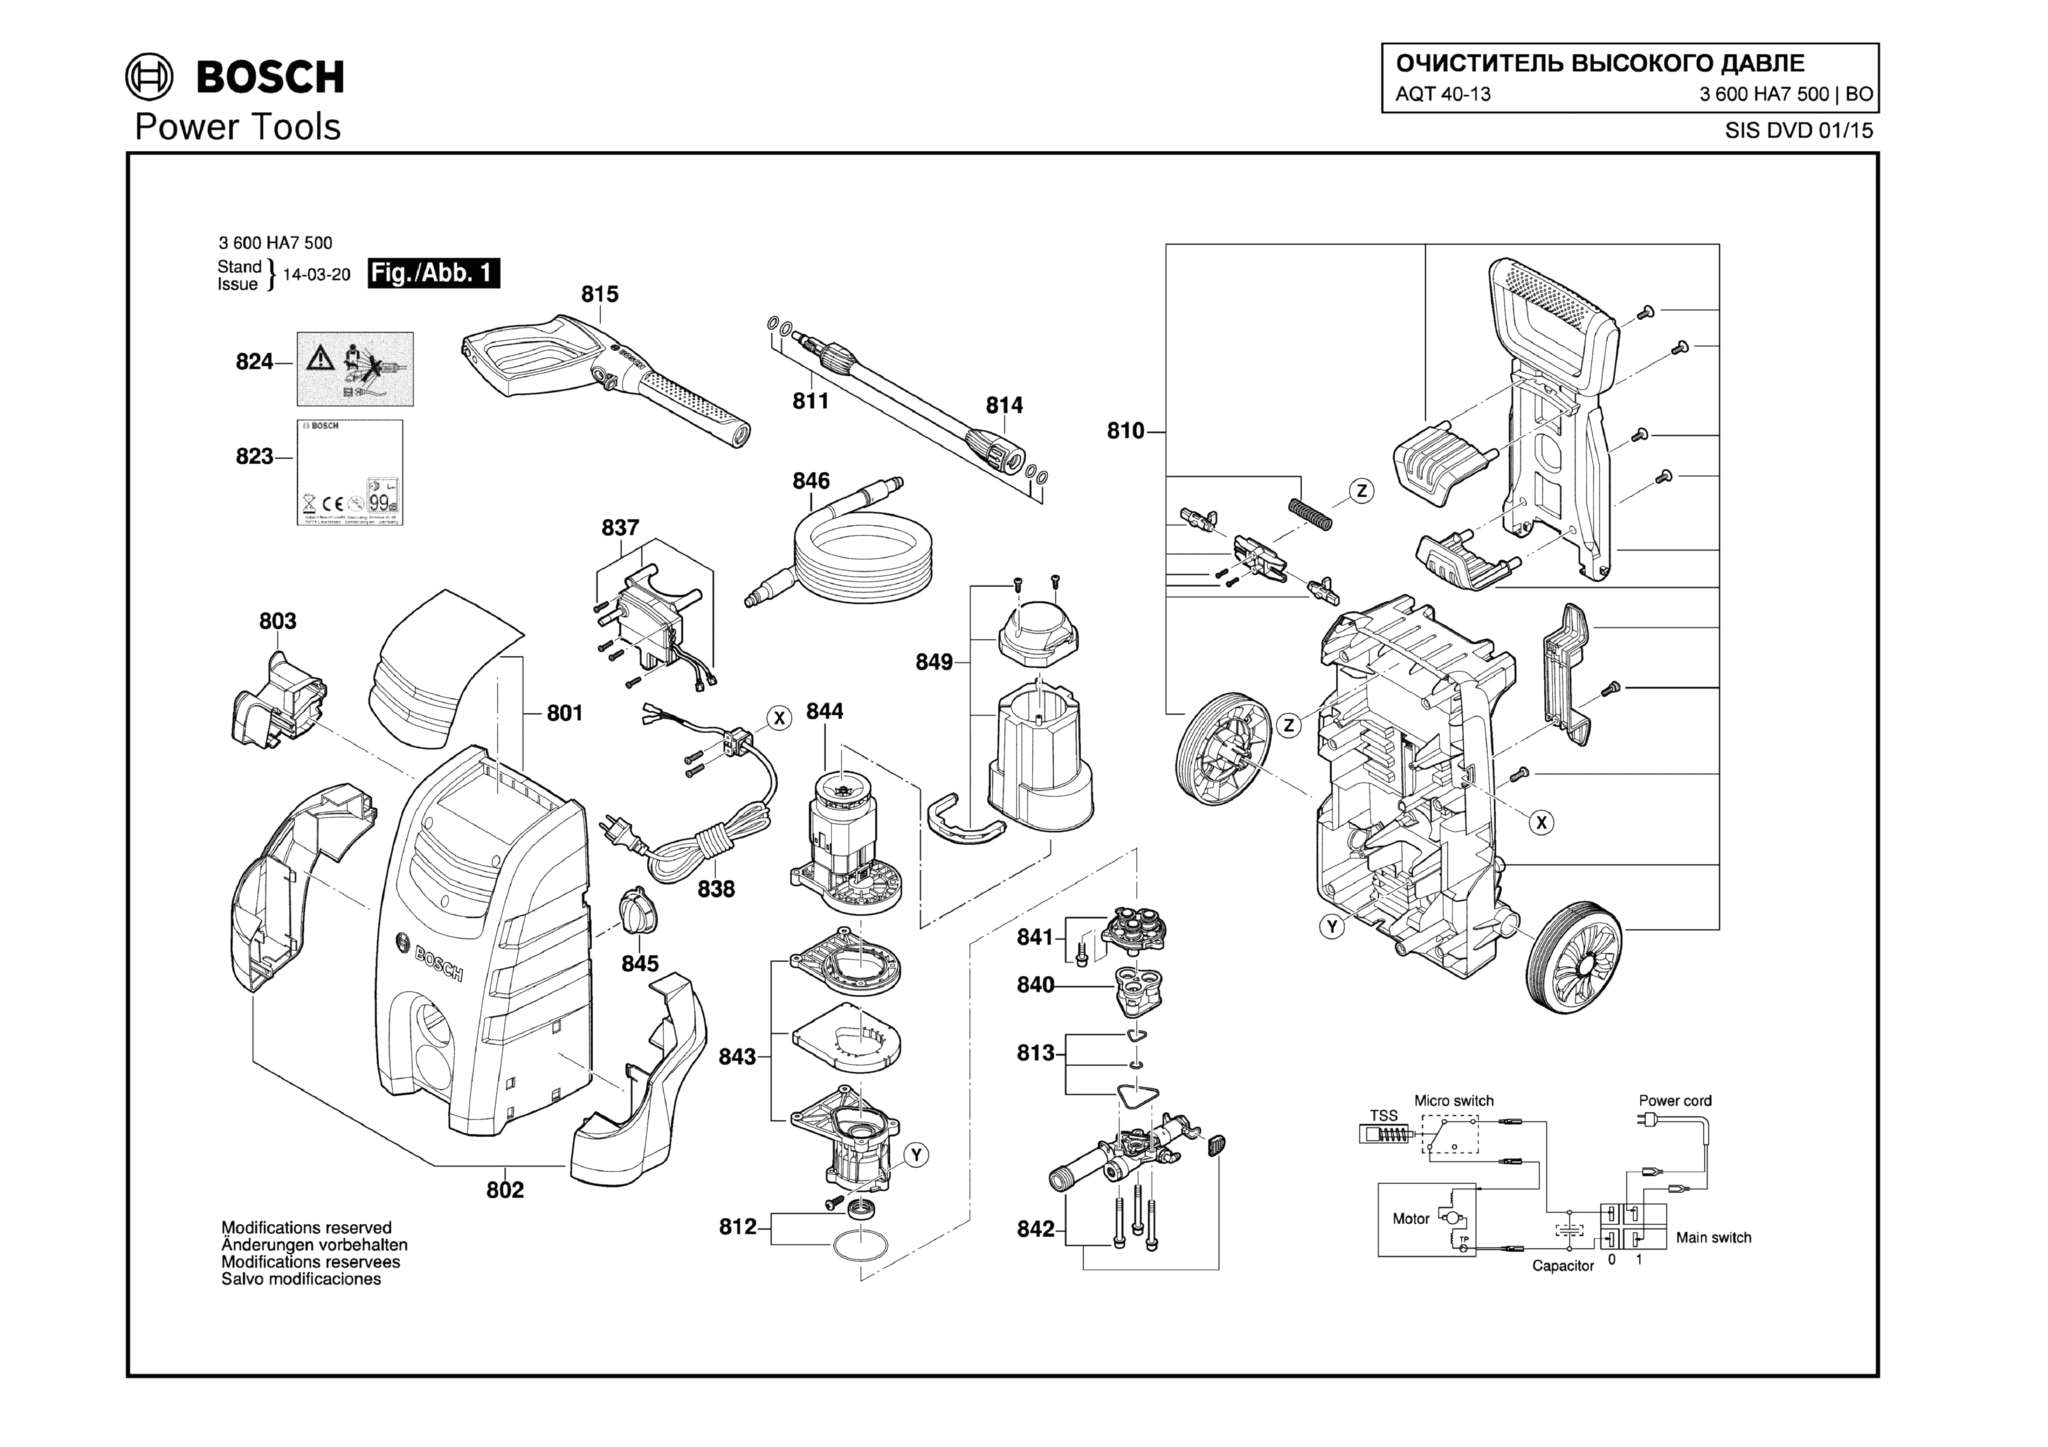 Запчасти, схема и деталировка Bosch AQT 40-13 (ТИП 3600HA7500)